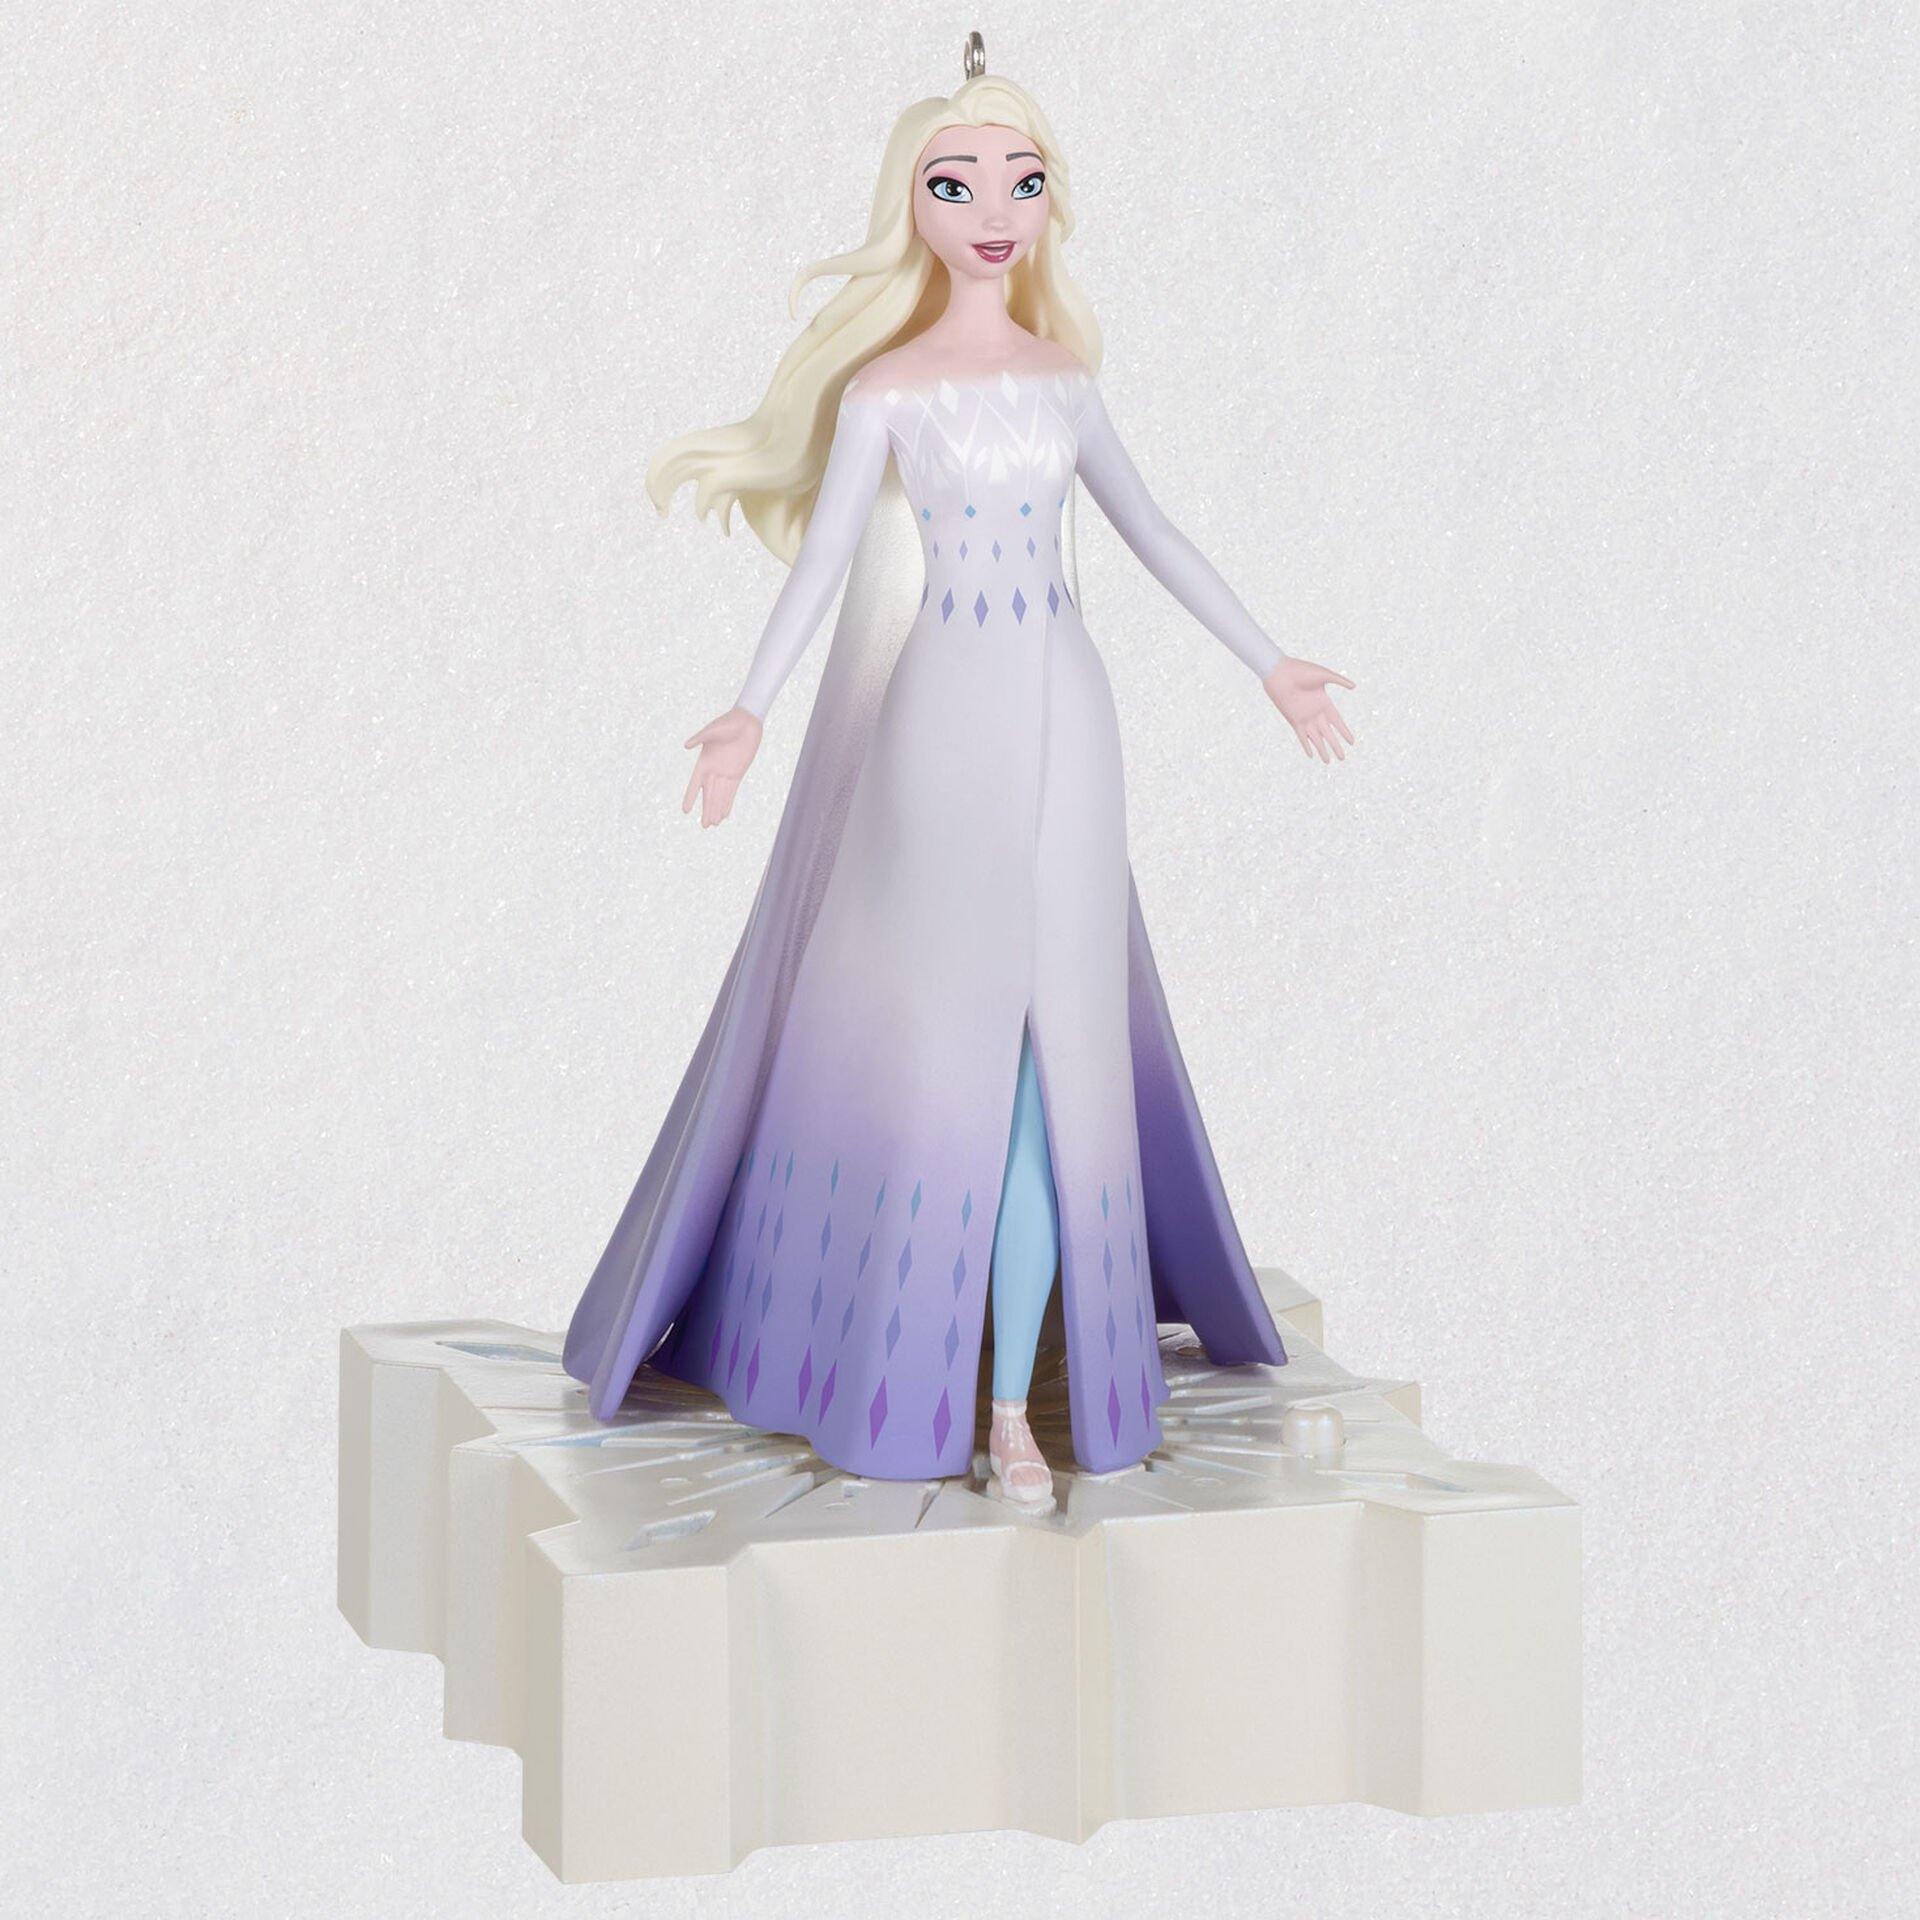 Elsa Musical - Com Luzes e Sons - Frozen 2 - 6482 - Mimo - Real